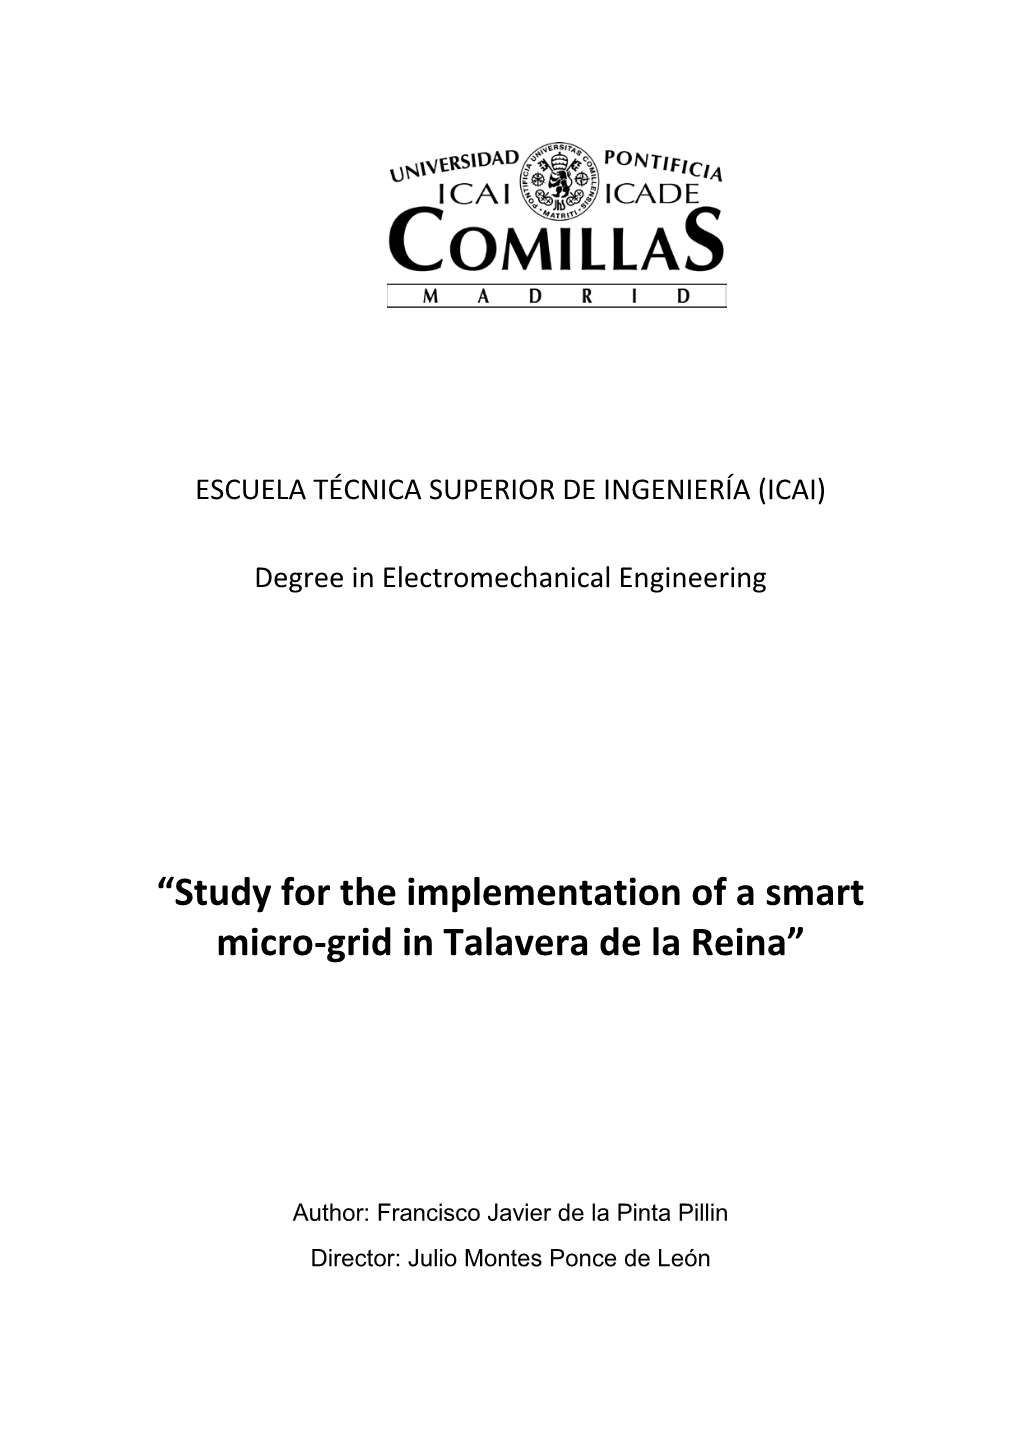 “Study for the Implementation of a Smart Micro-Grid in Talavera De La Reina”